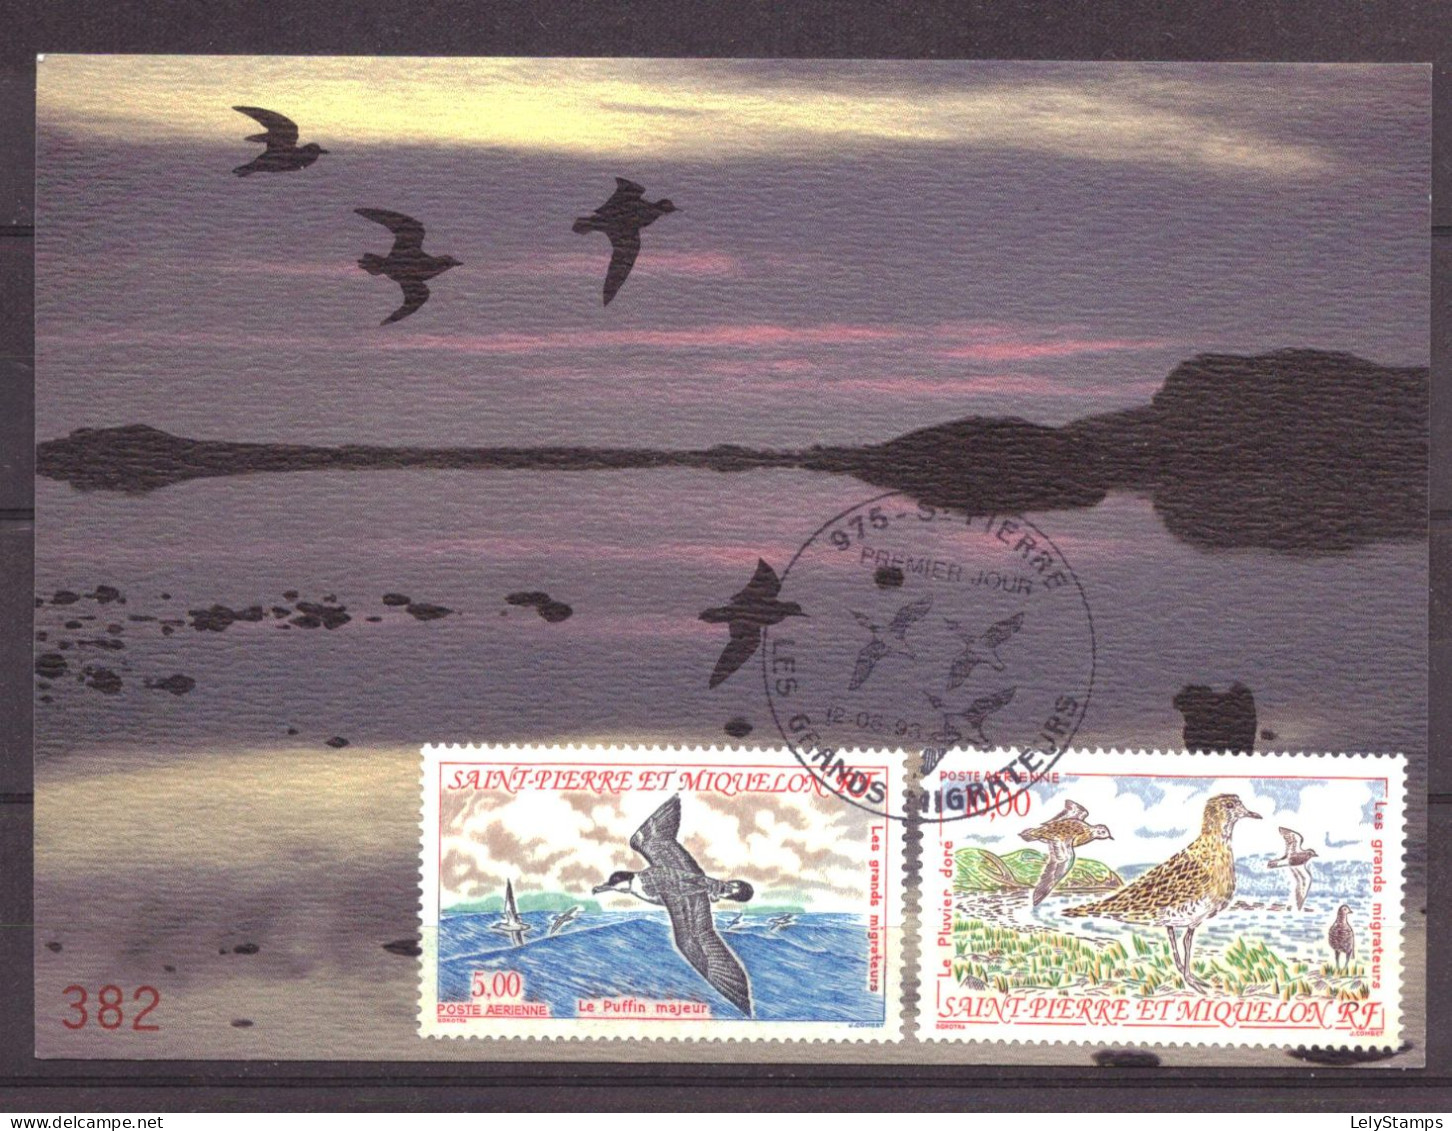 Saint-Pierre En Miquelon 654 & 655 FDC Birds Animals Nature (1993) - Tarjetas – Máxima